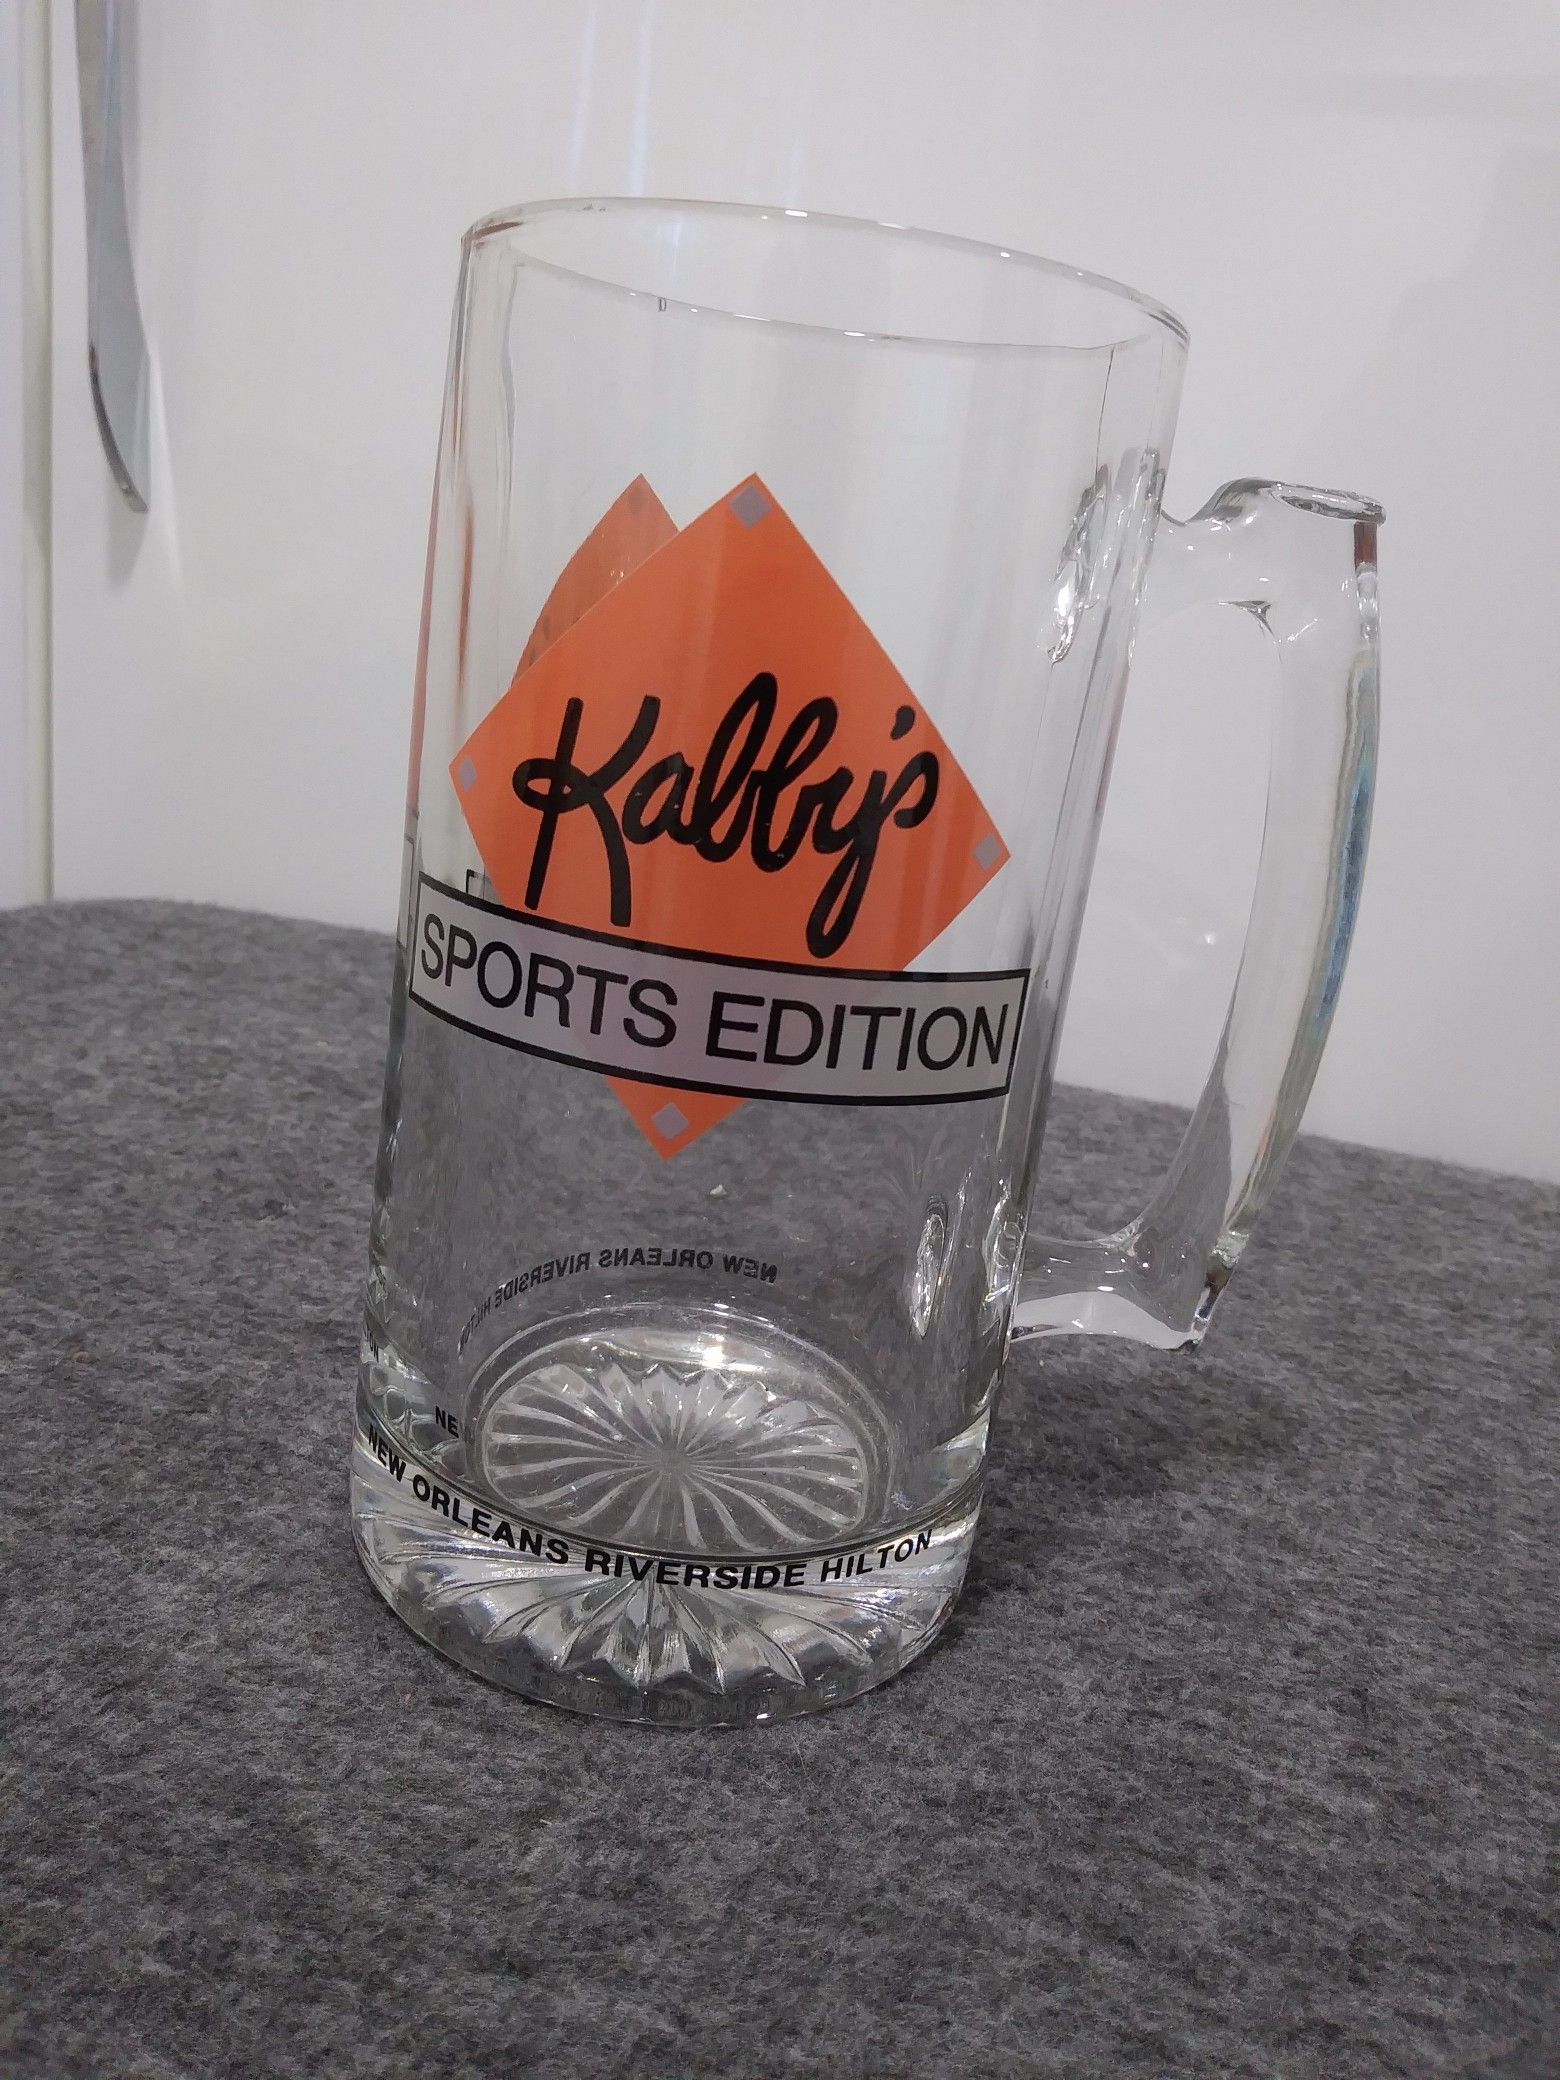 Kabbys Sportsbar New Orleans beer glass/mug LARGE